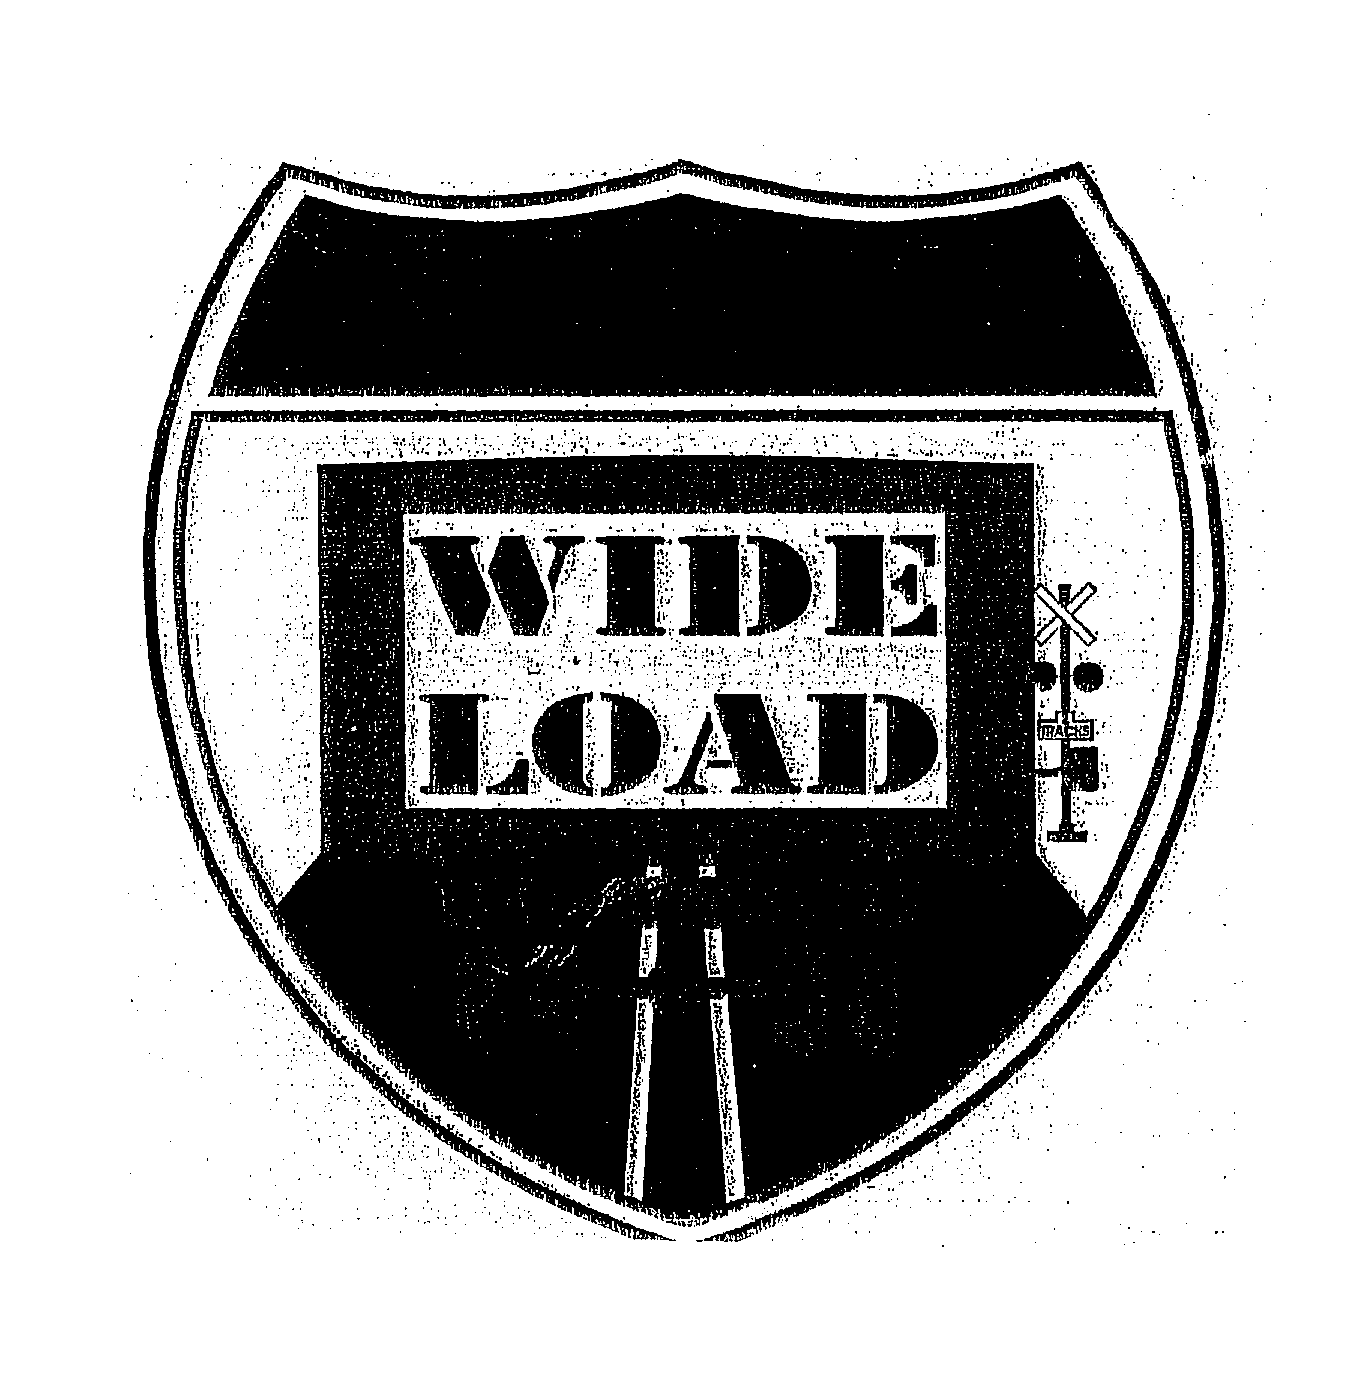 Trademark Logo WIDE LOAD